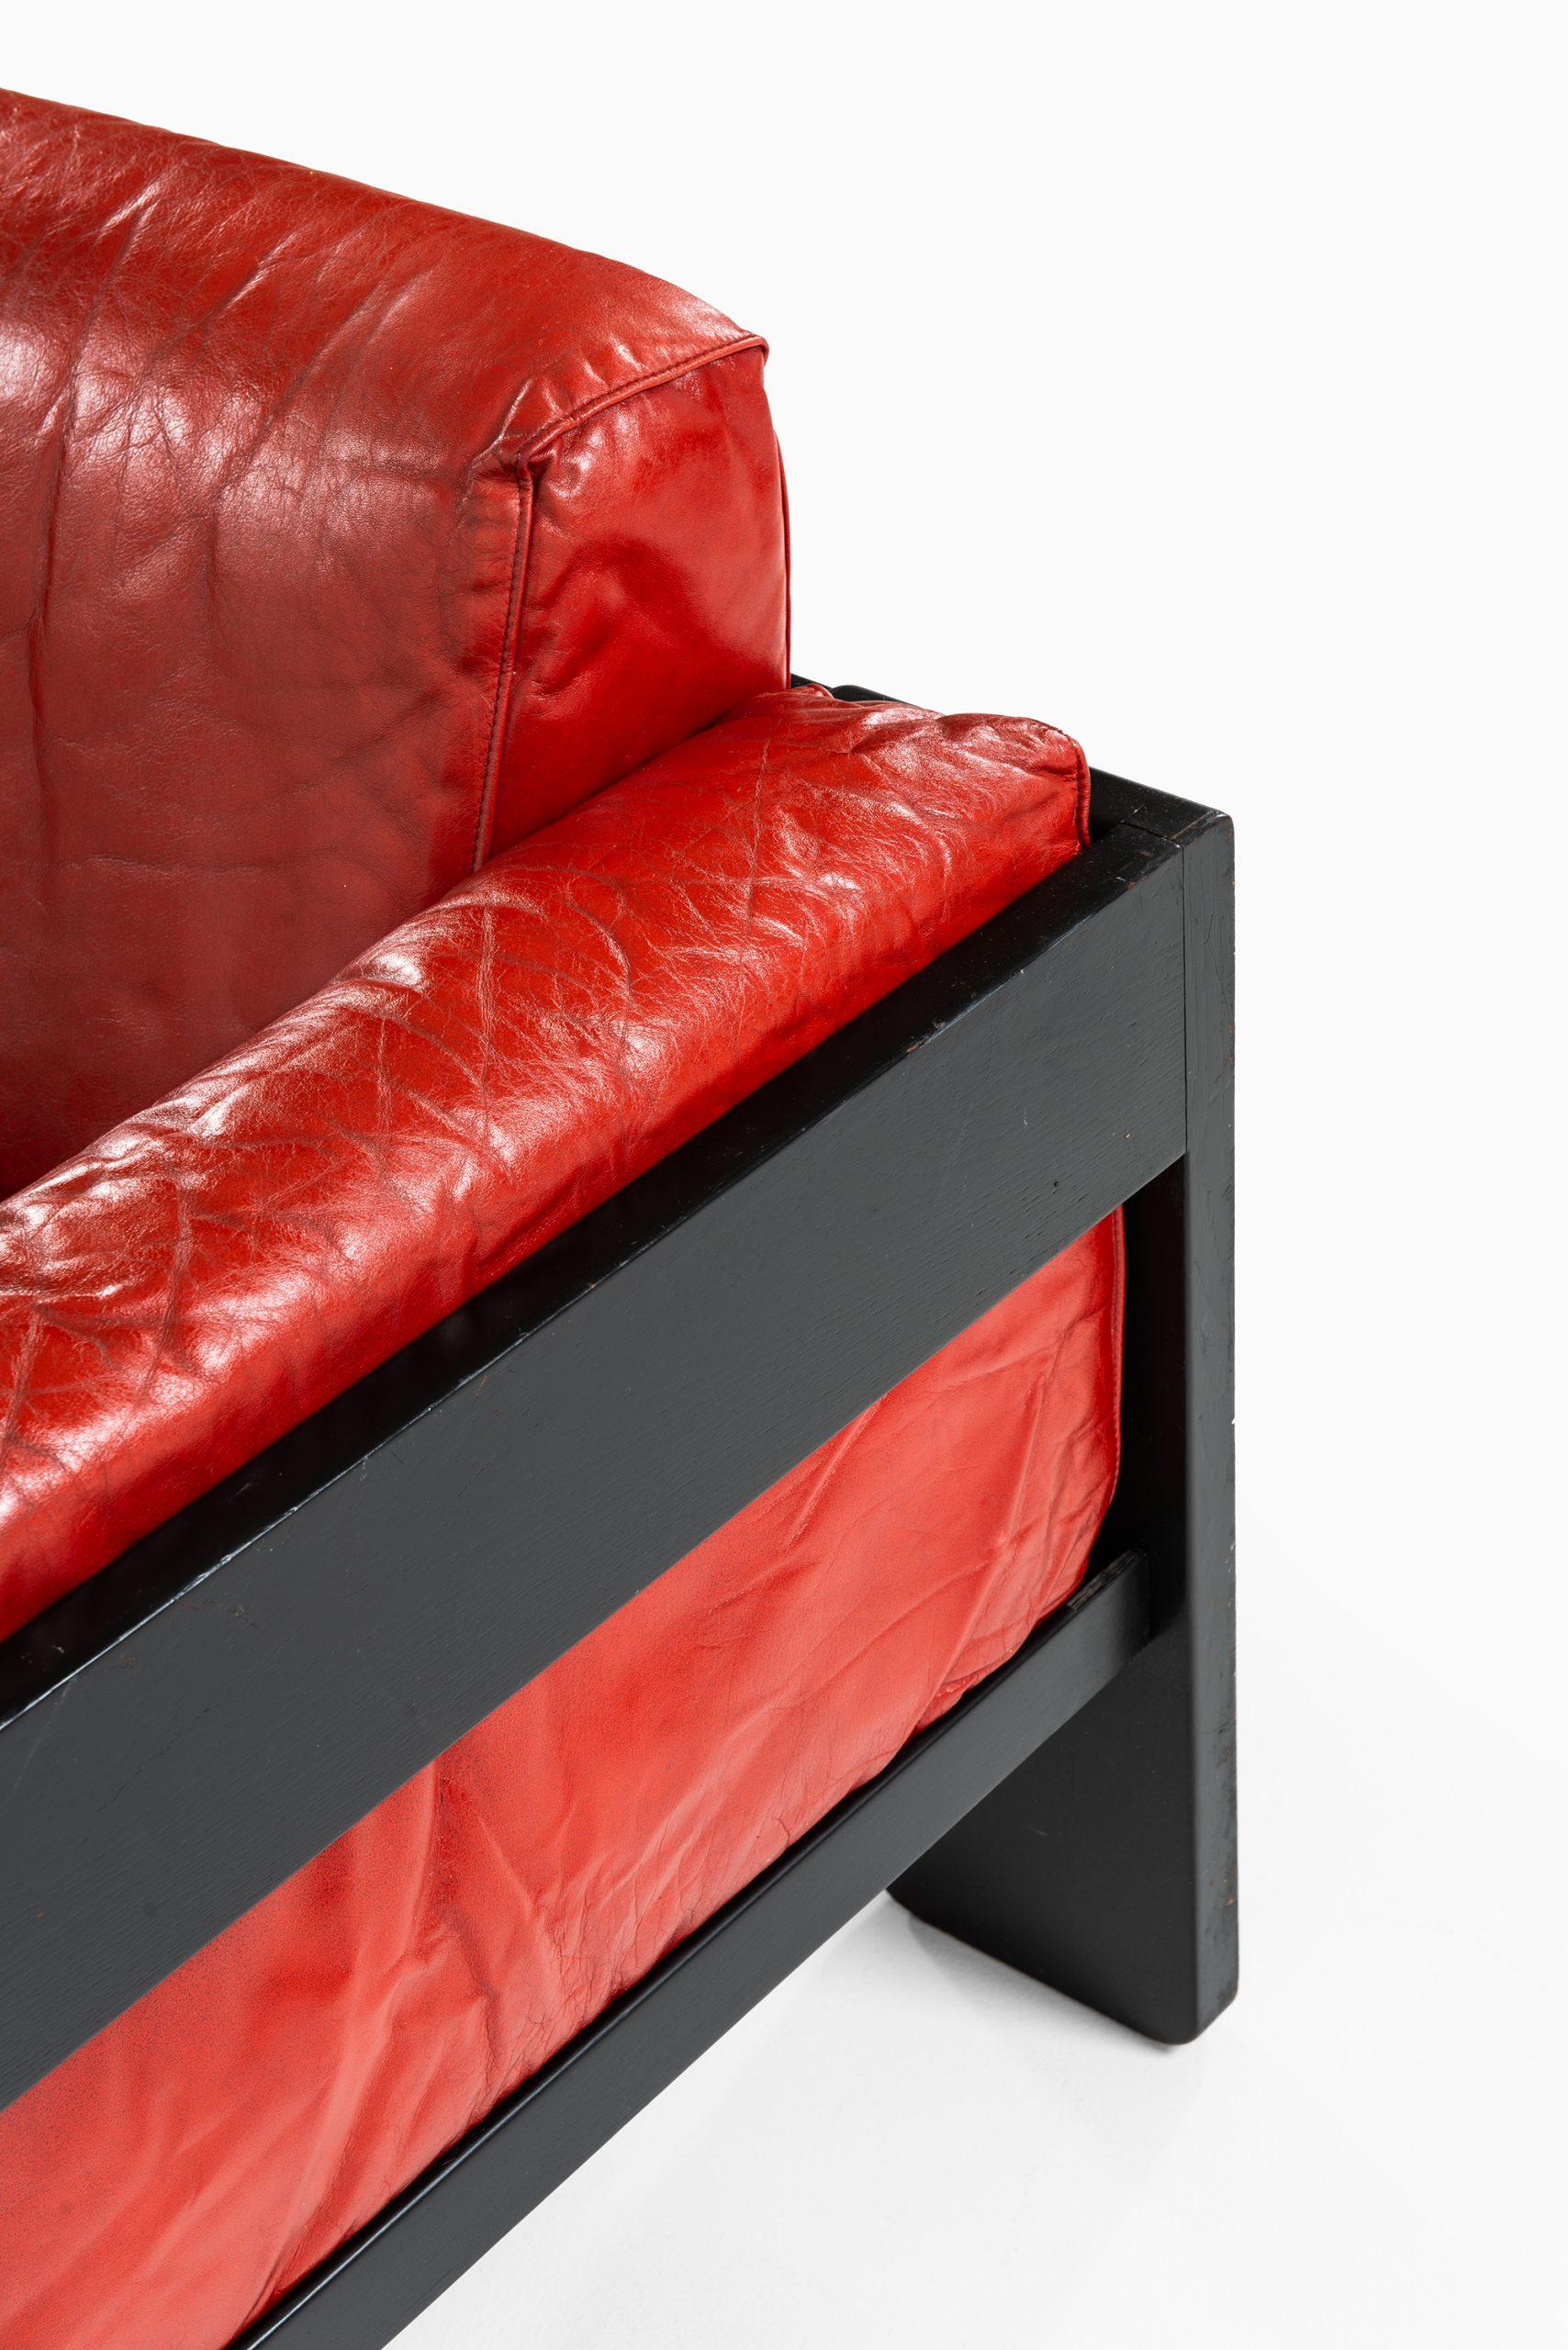 Tobia Scarpa Sofa Model Bastiano Produced by Haimi in Finland For Sale 2